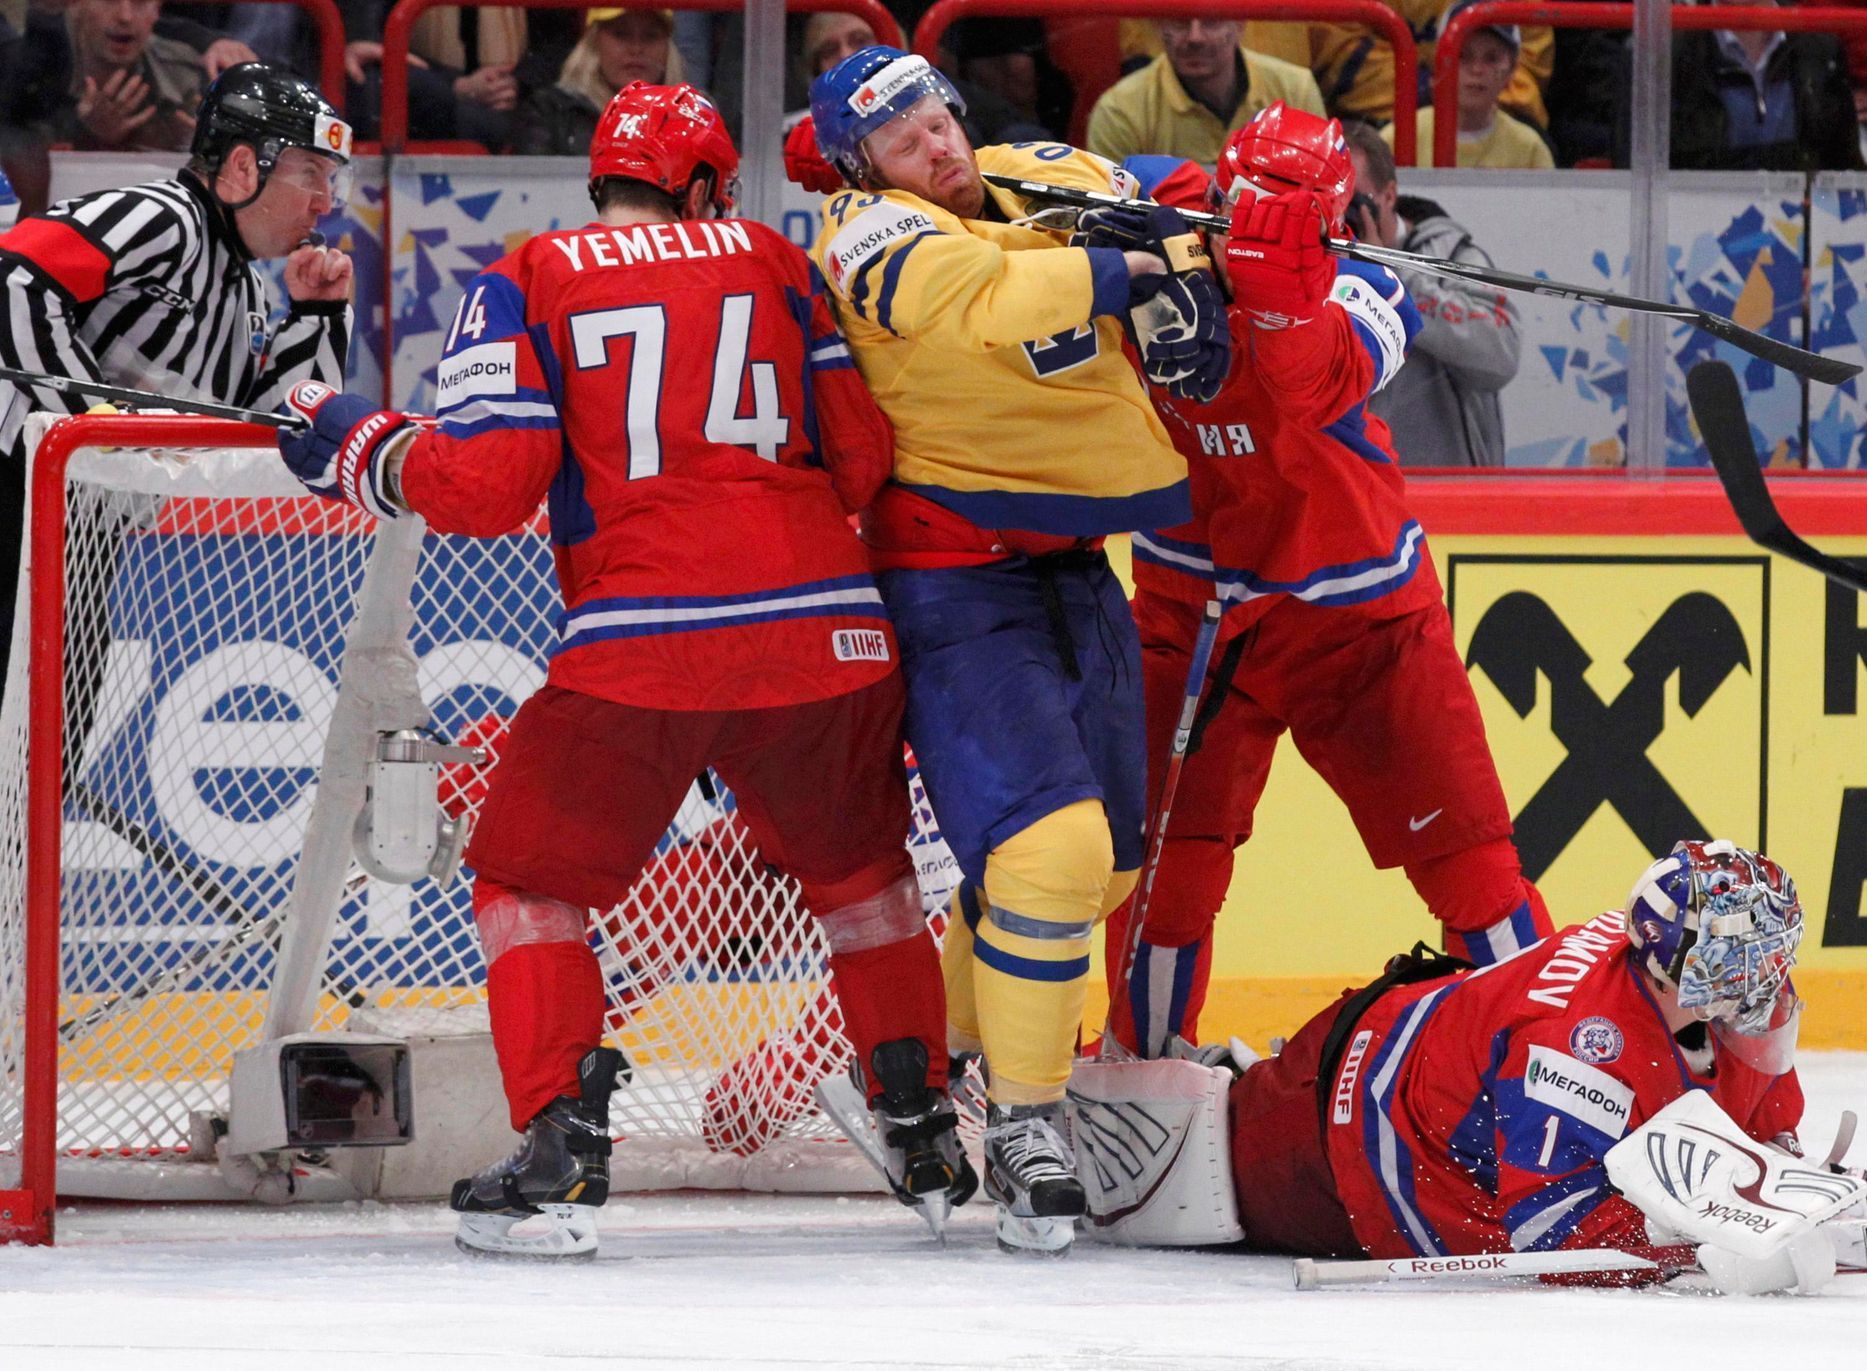 MS hokej: Rusko - Švédsko (Dmitrij Kalinin, Johan Franzén, Alexej Jemelin, Semjon Varlamov)